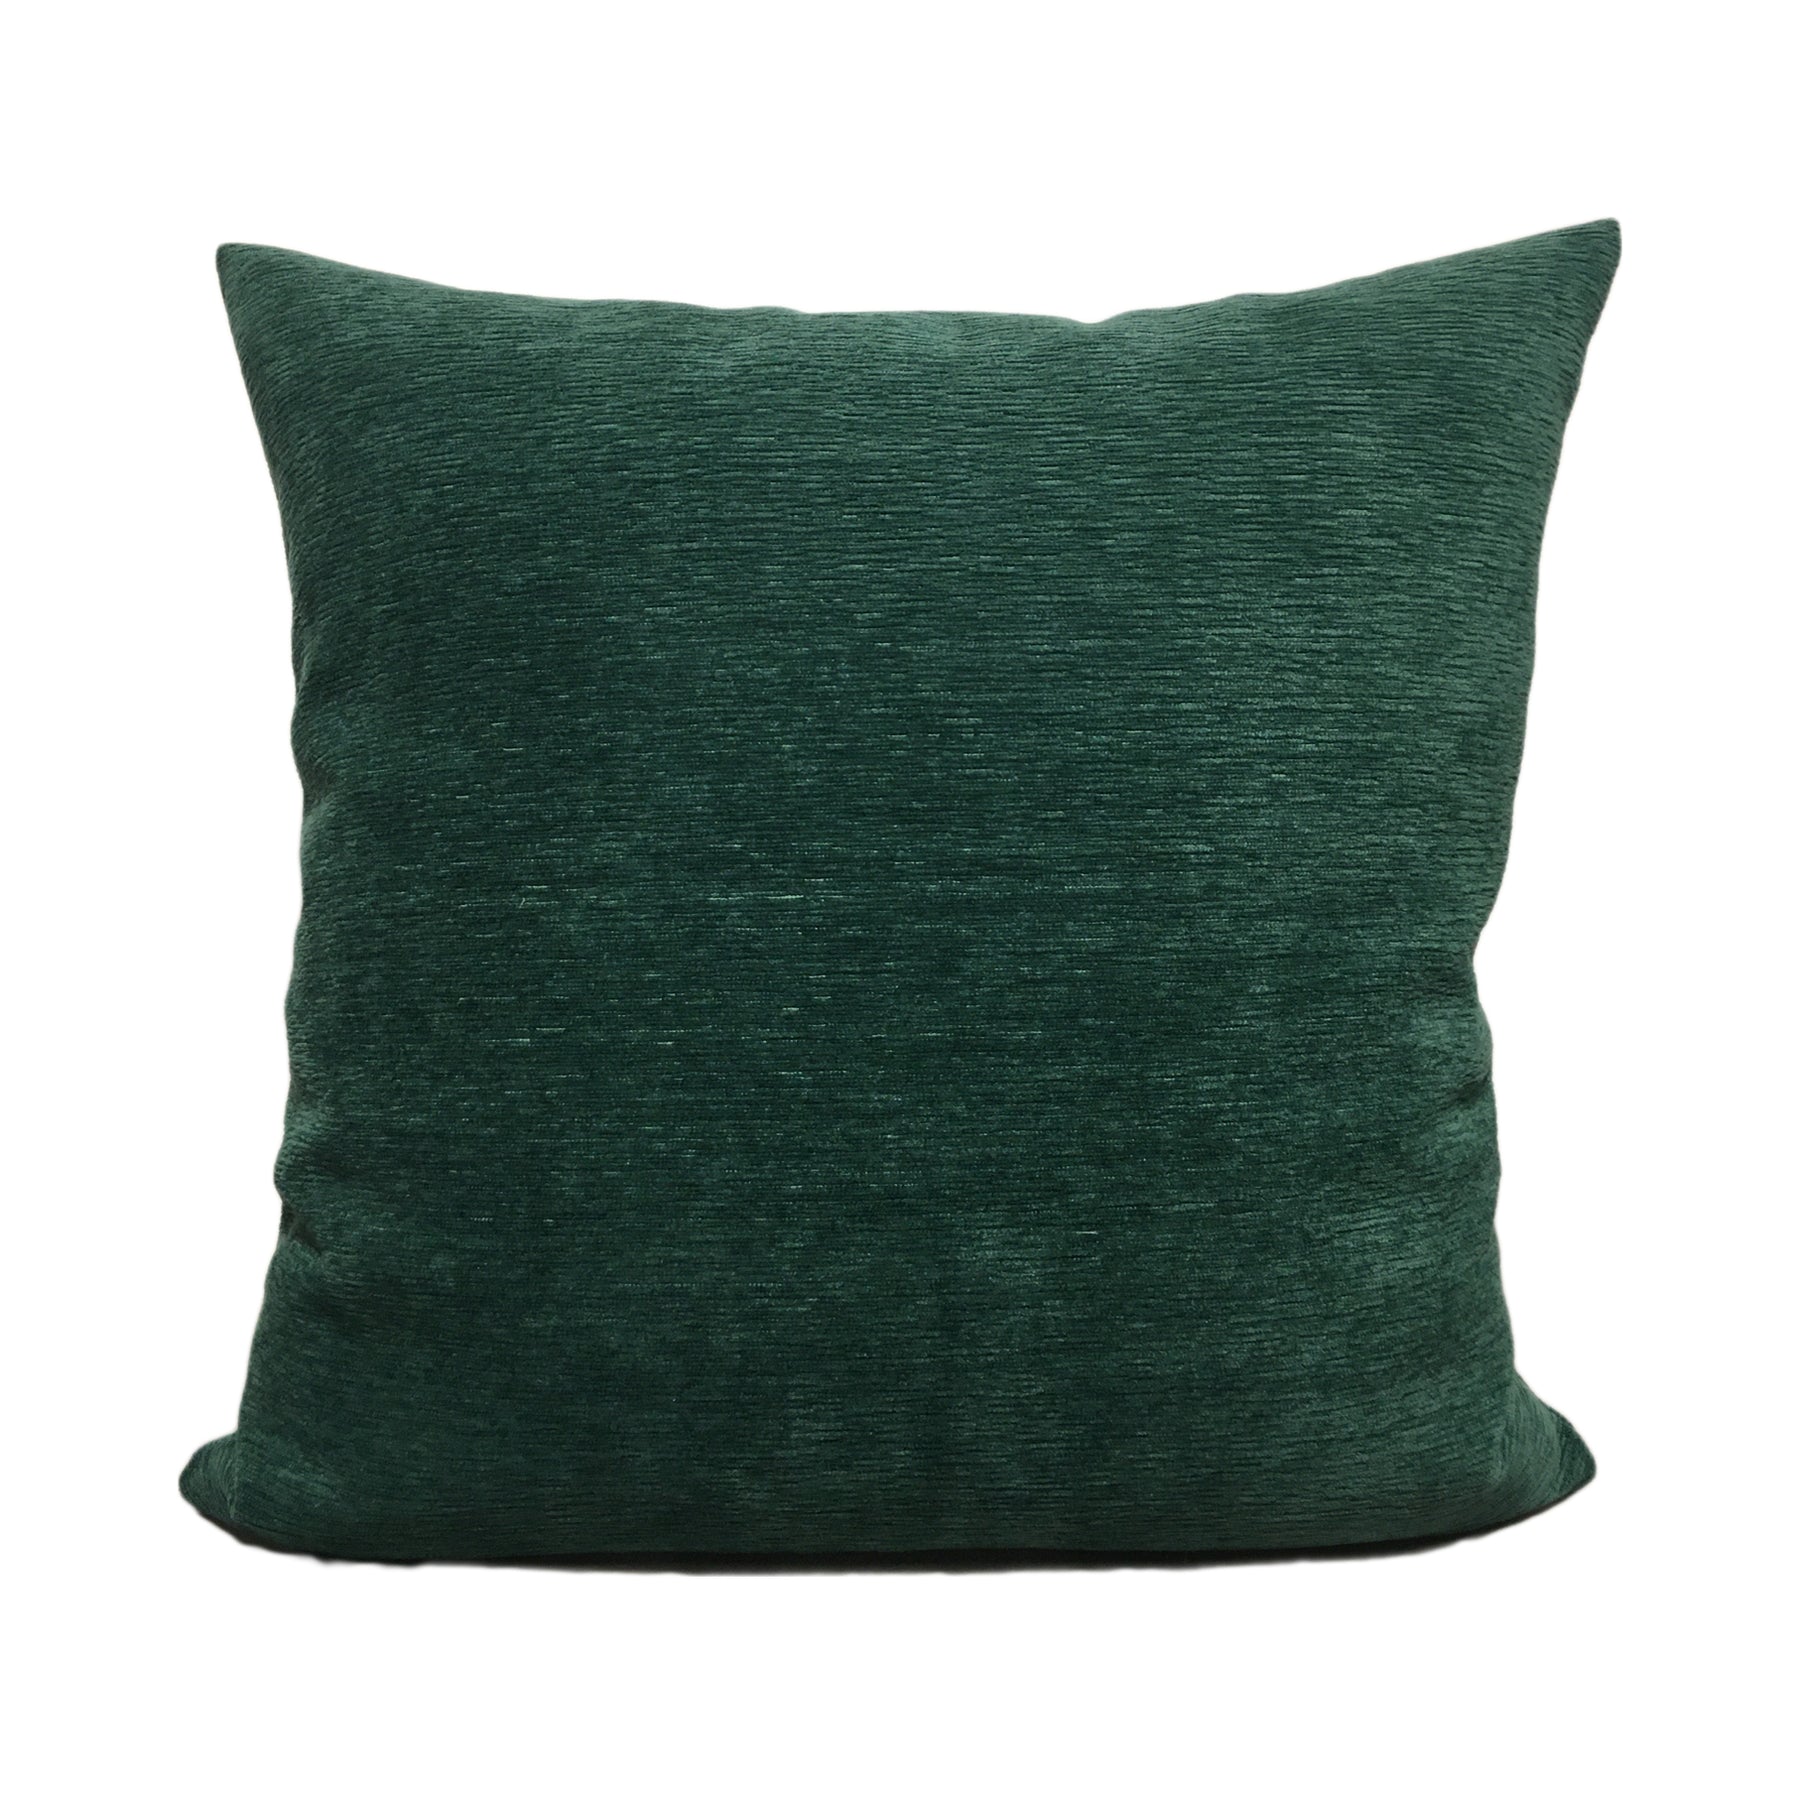 McCoy Emerald Green Throw Pillow 20x20